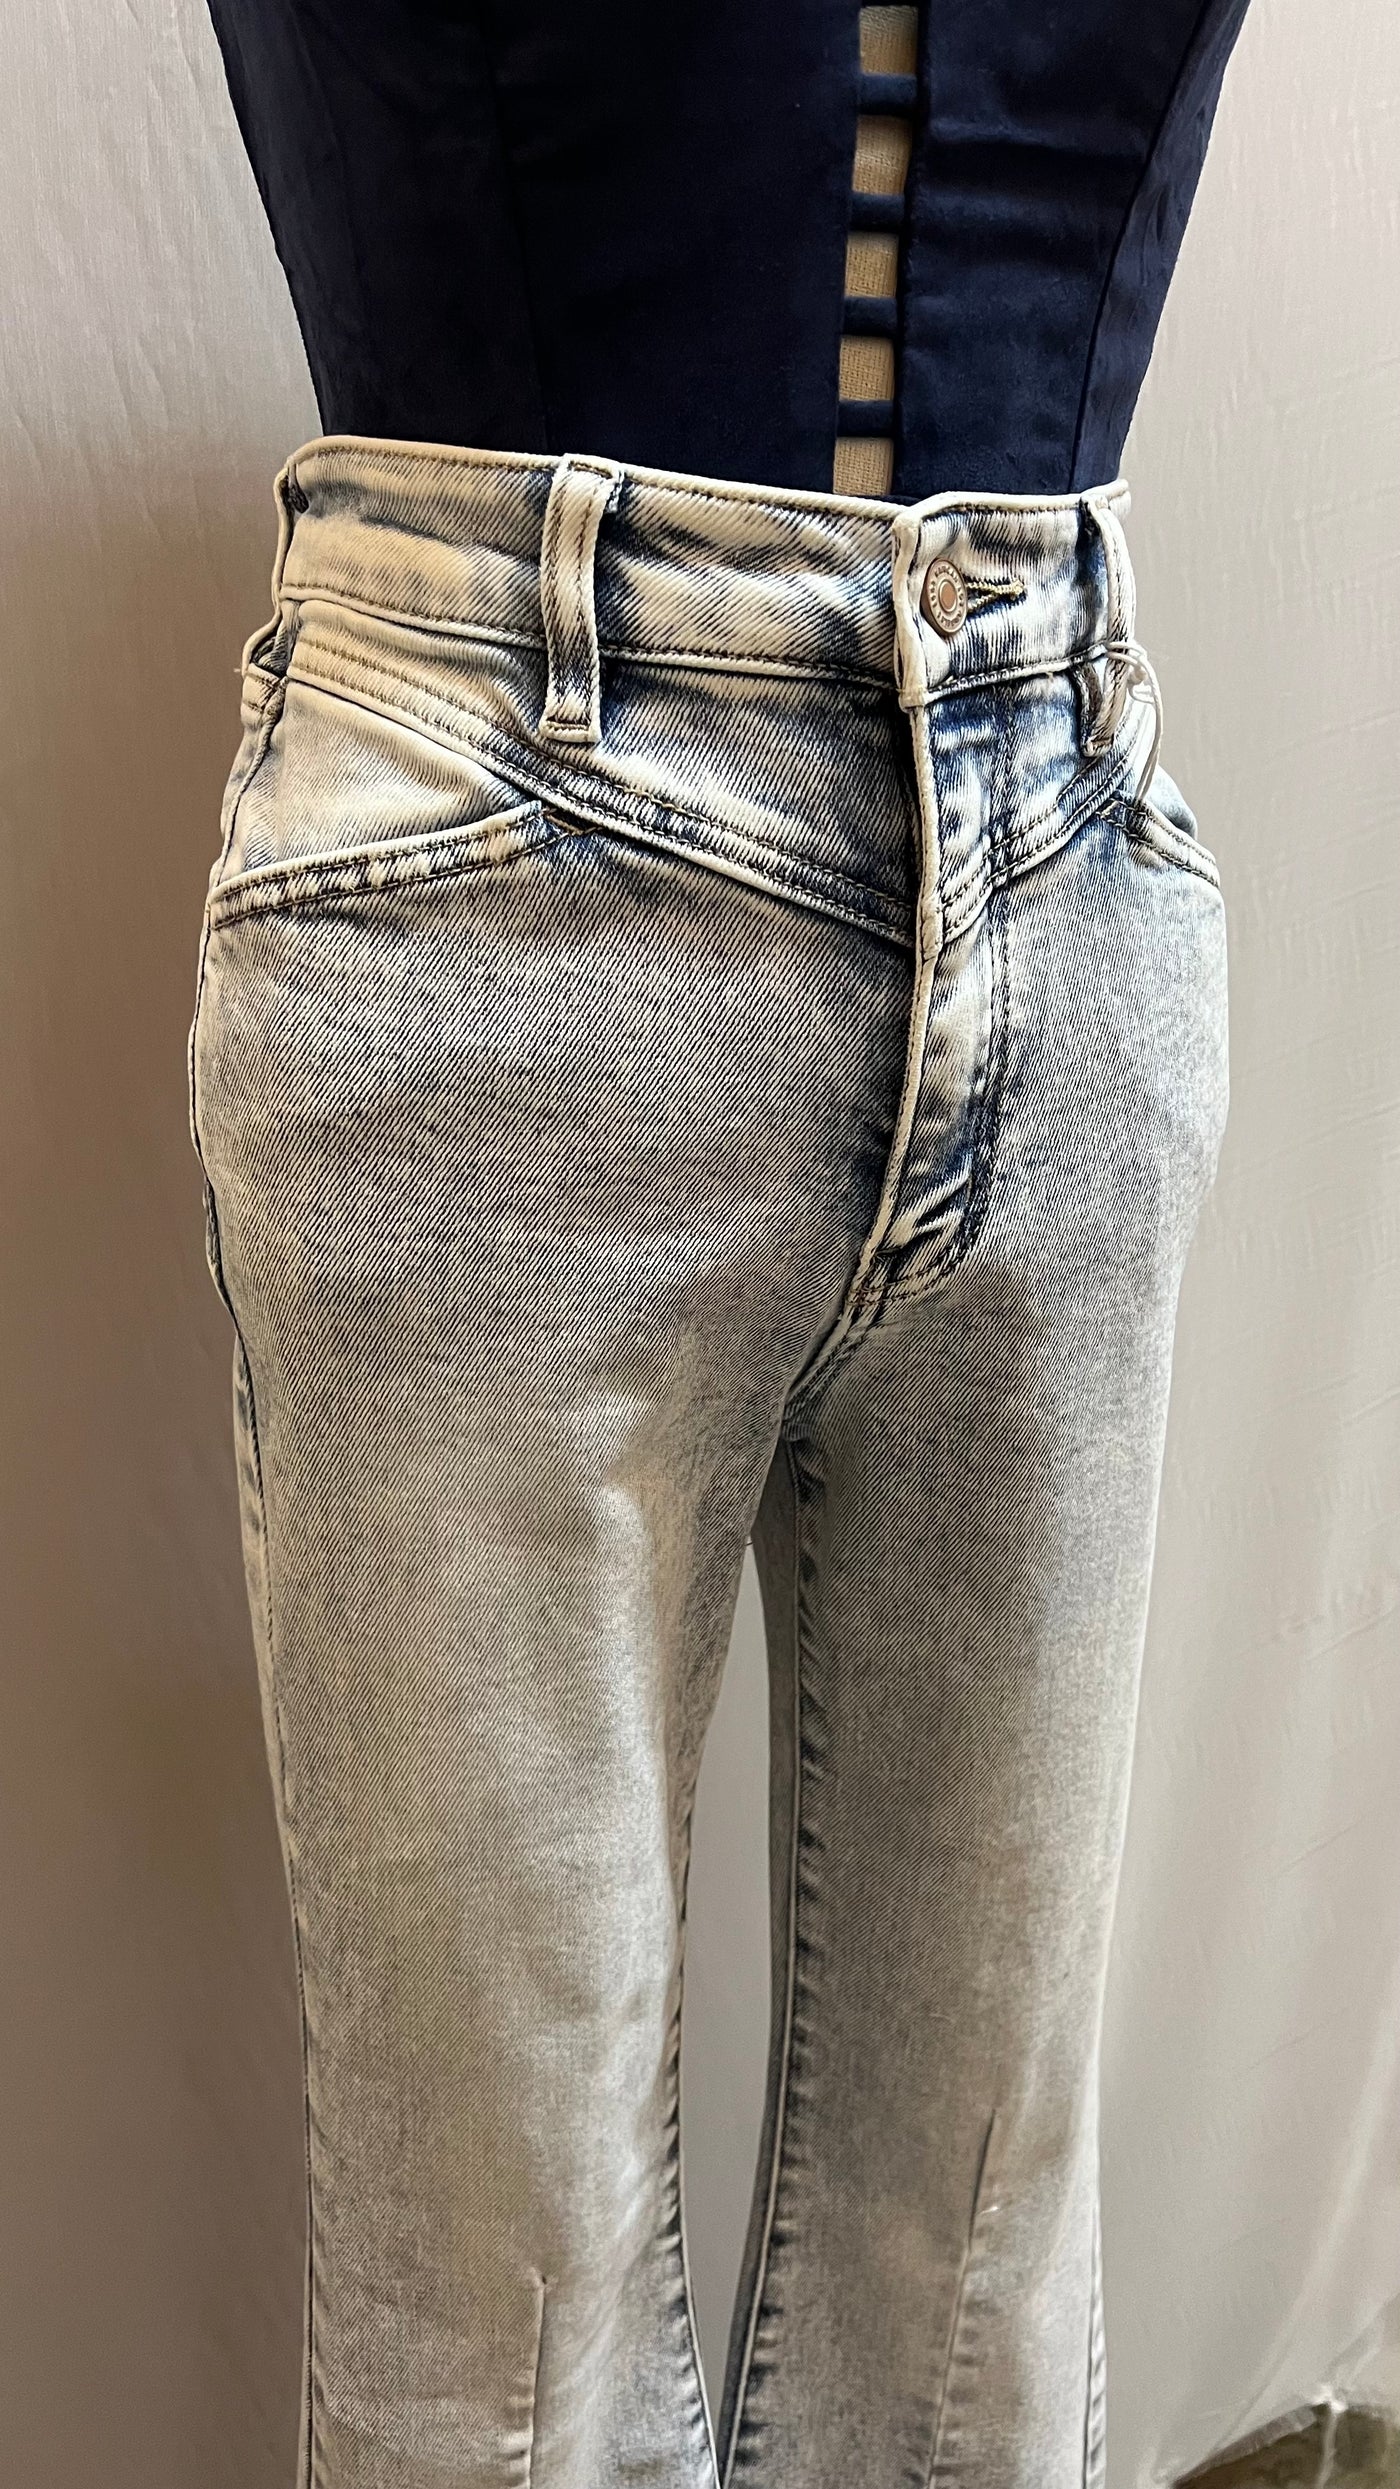 Vintage inspired jeans